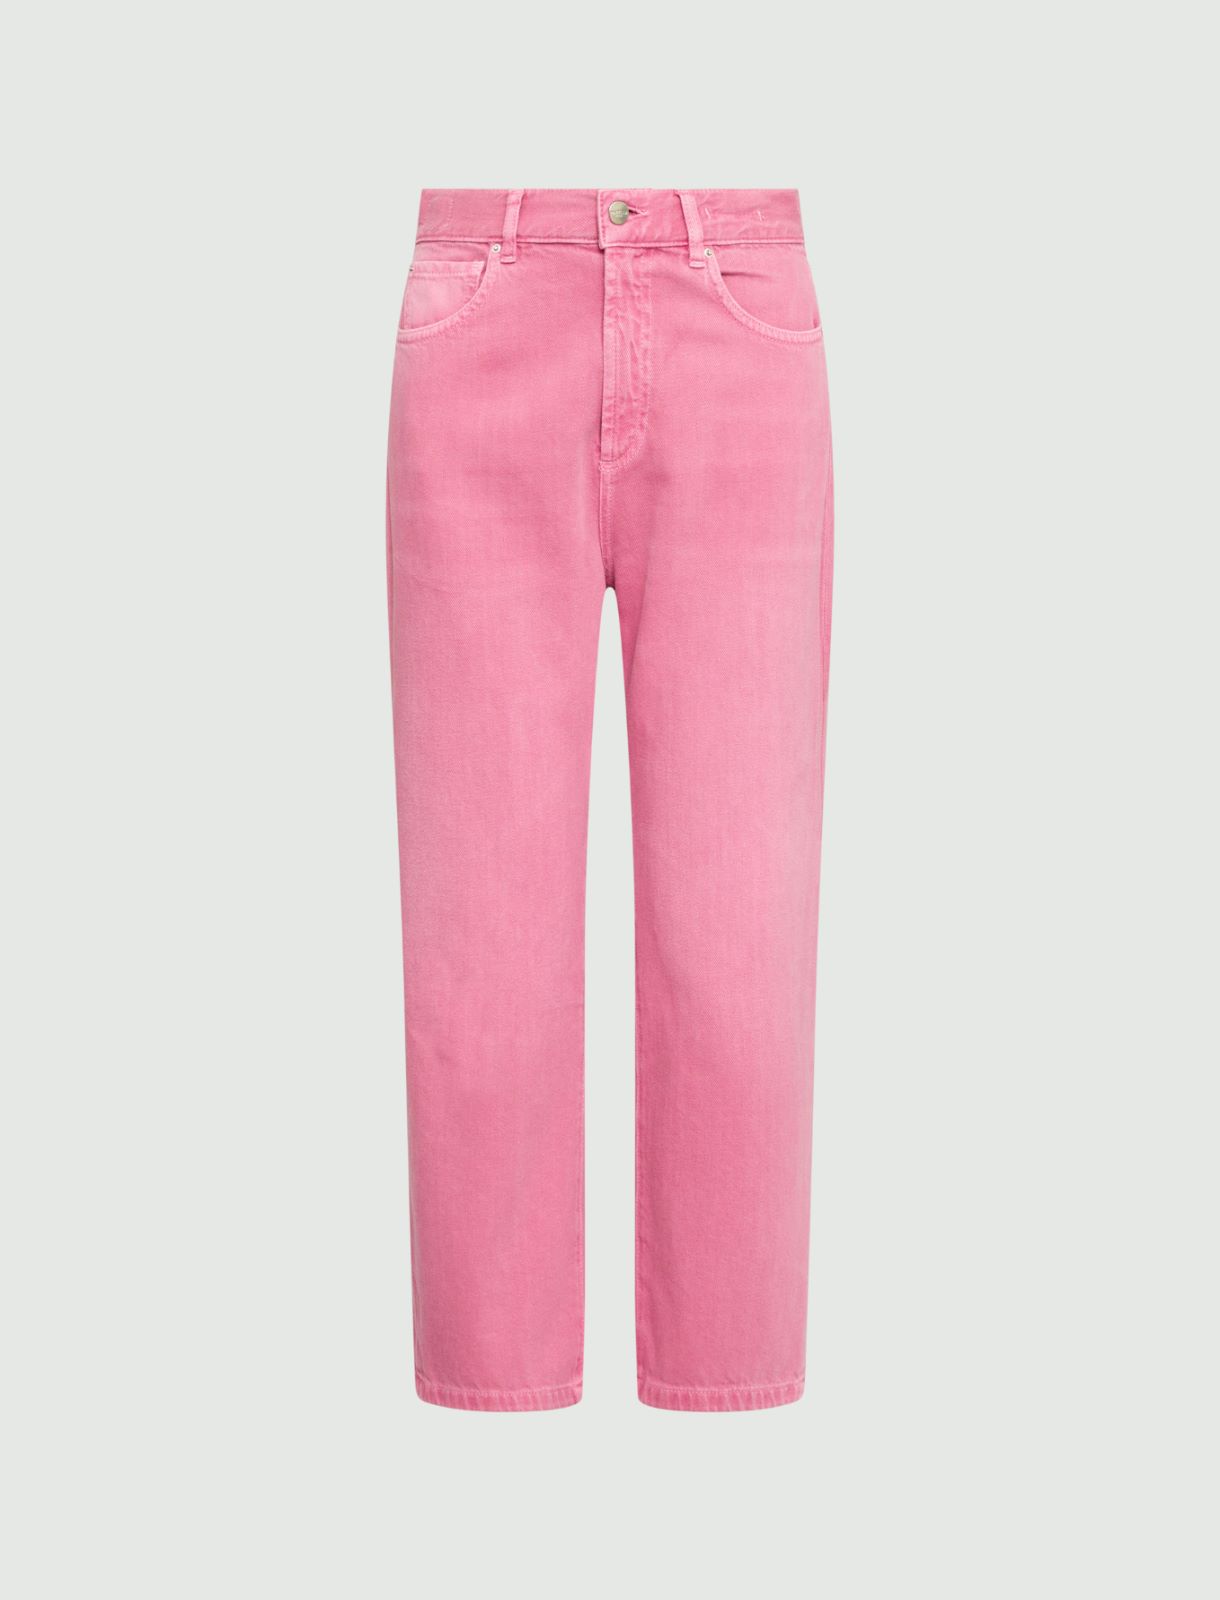 Mom Fit Jeans - Shocking pink - Marella - 2